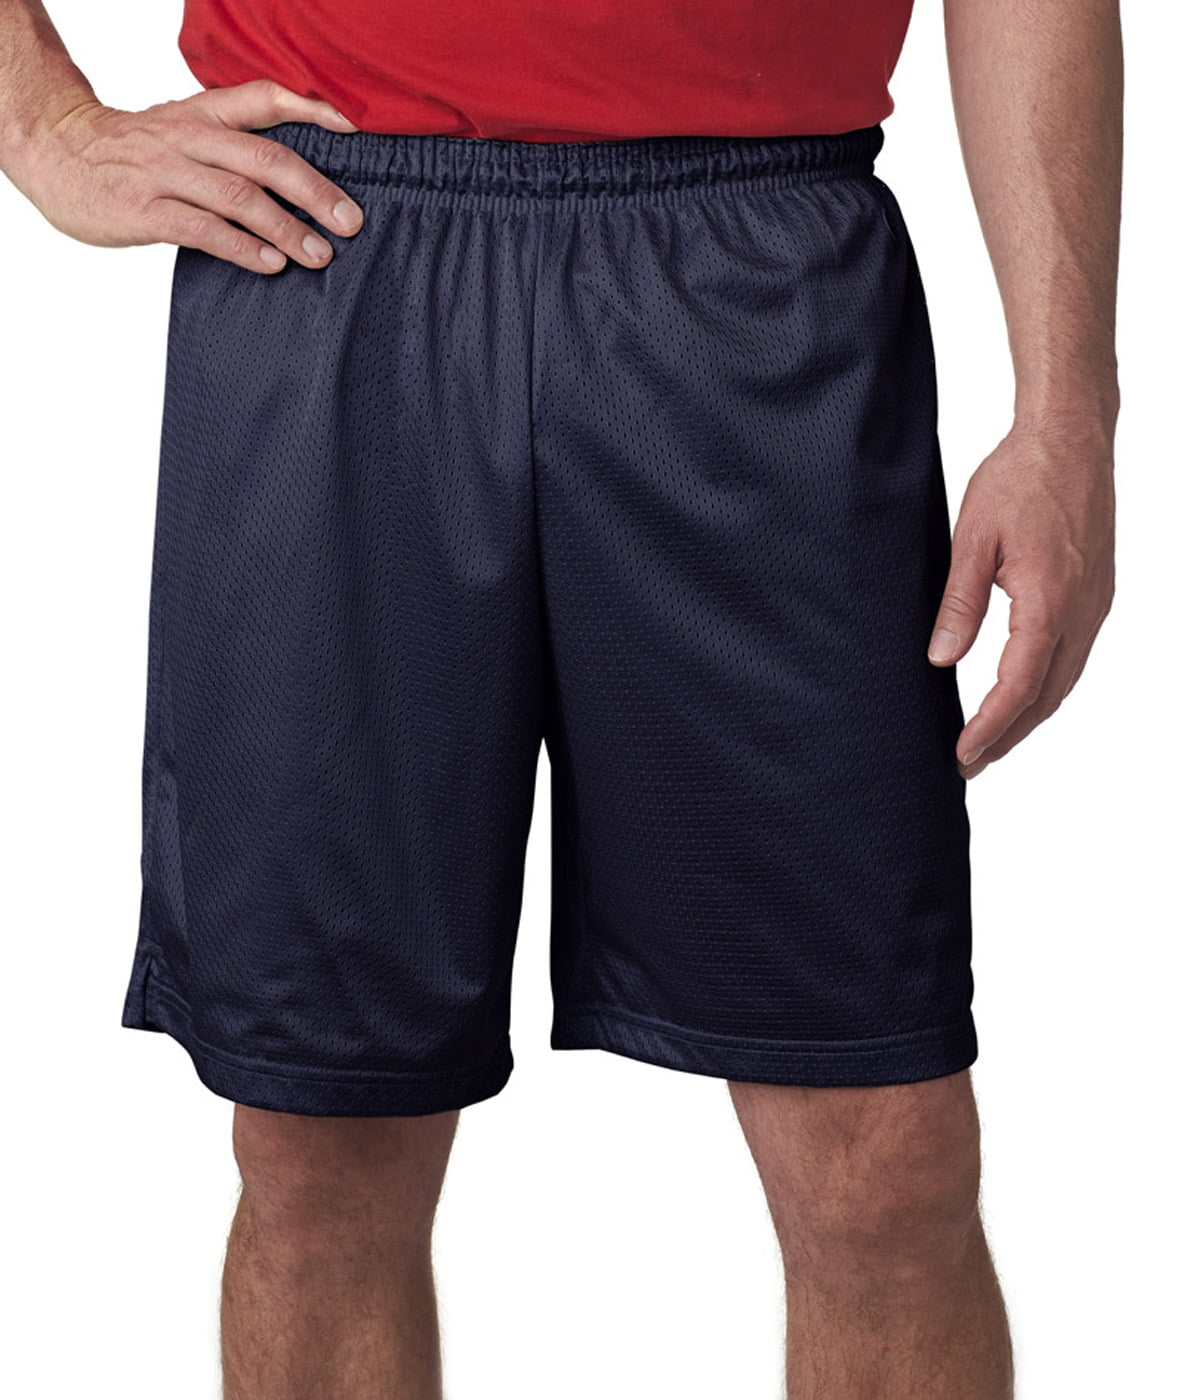 Champion - Mesh Shorts - 8731 - Walmart.com